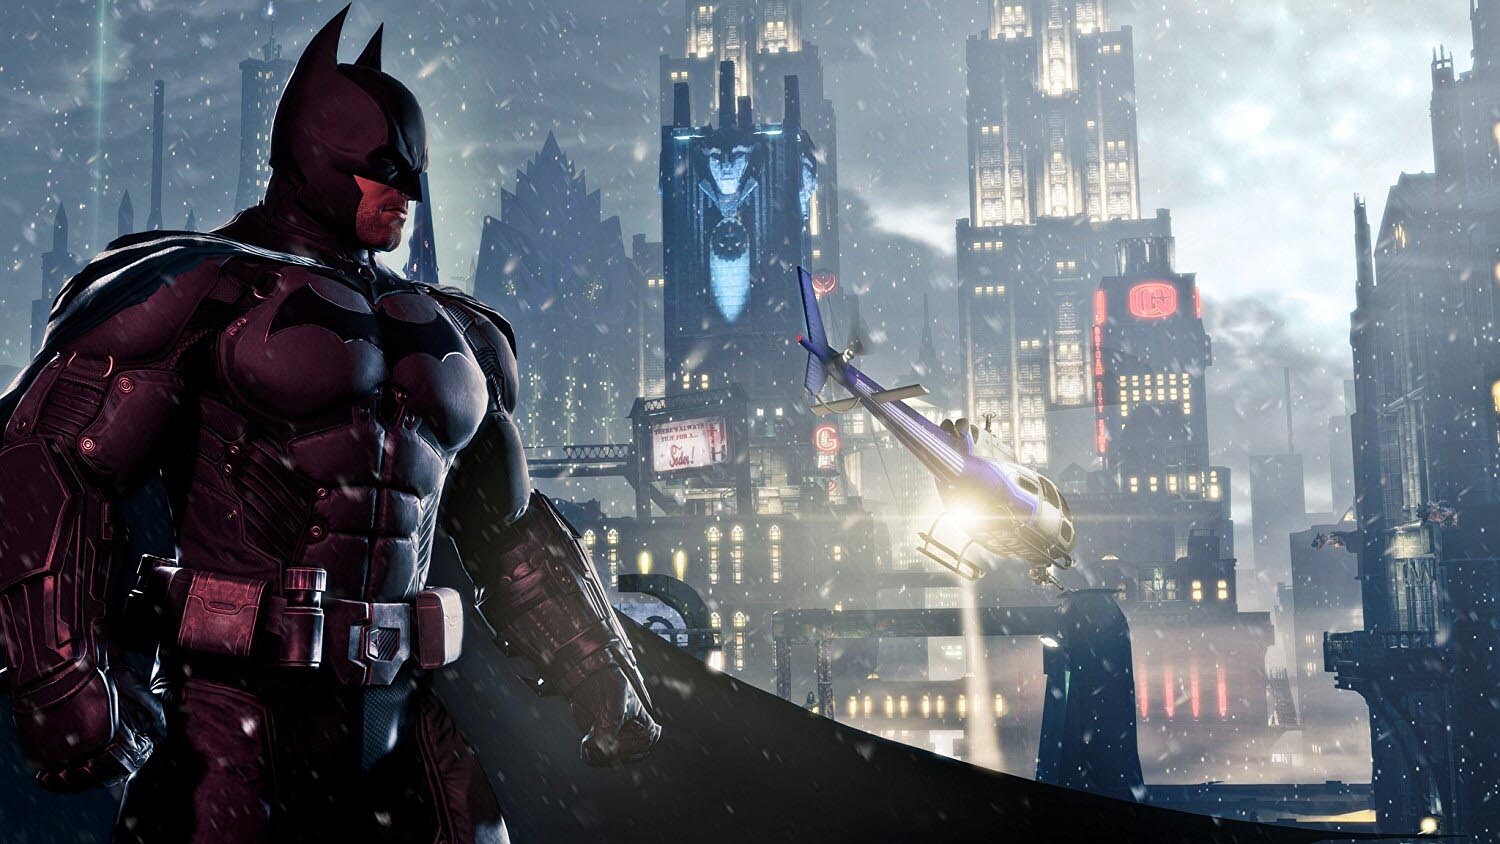 Batman Arkham City GOTY Steam Key for PC - Buy now